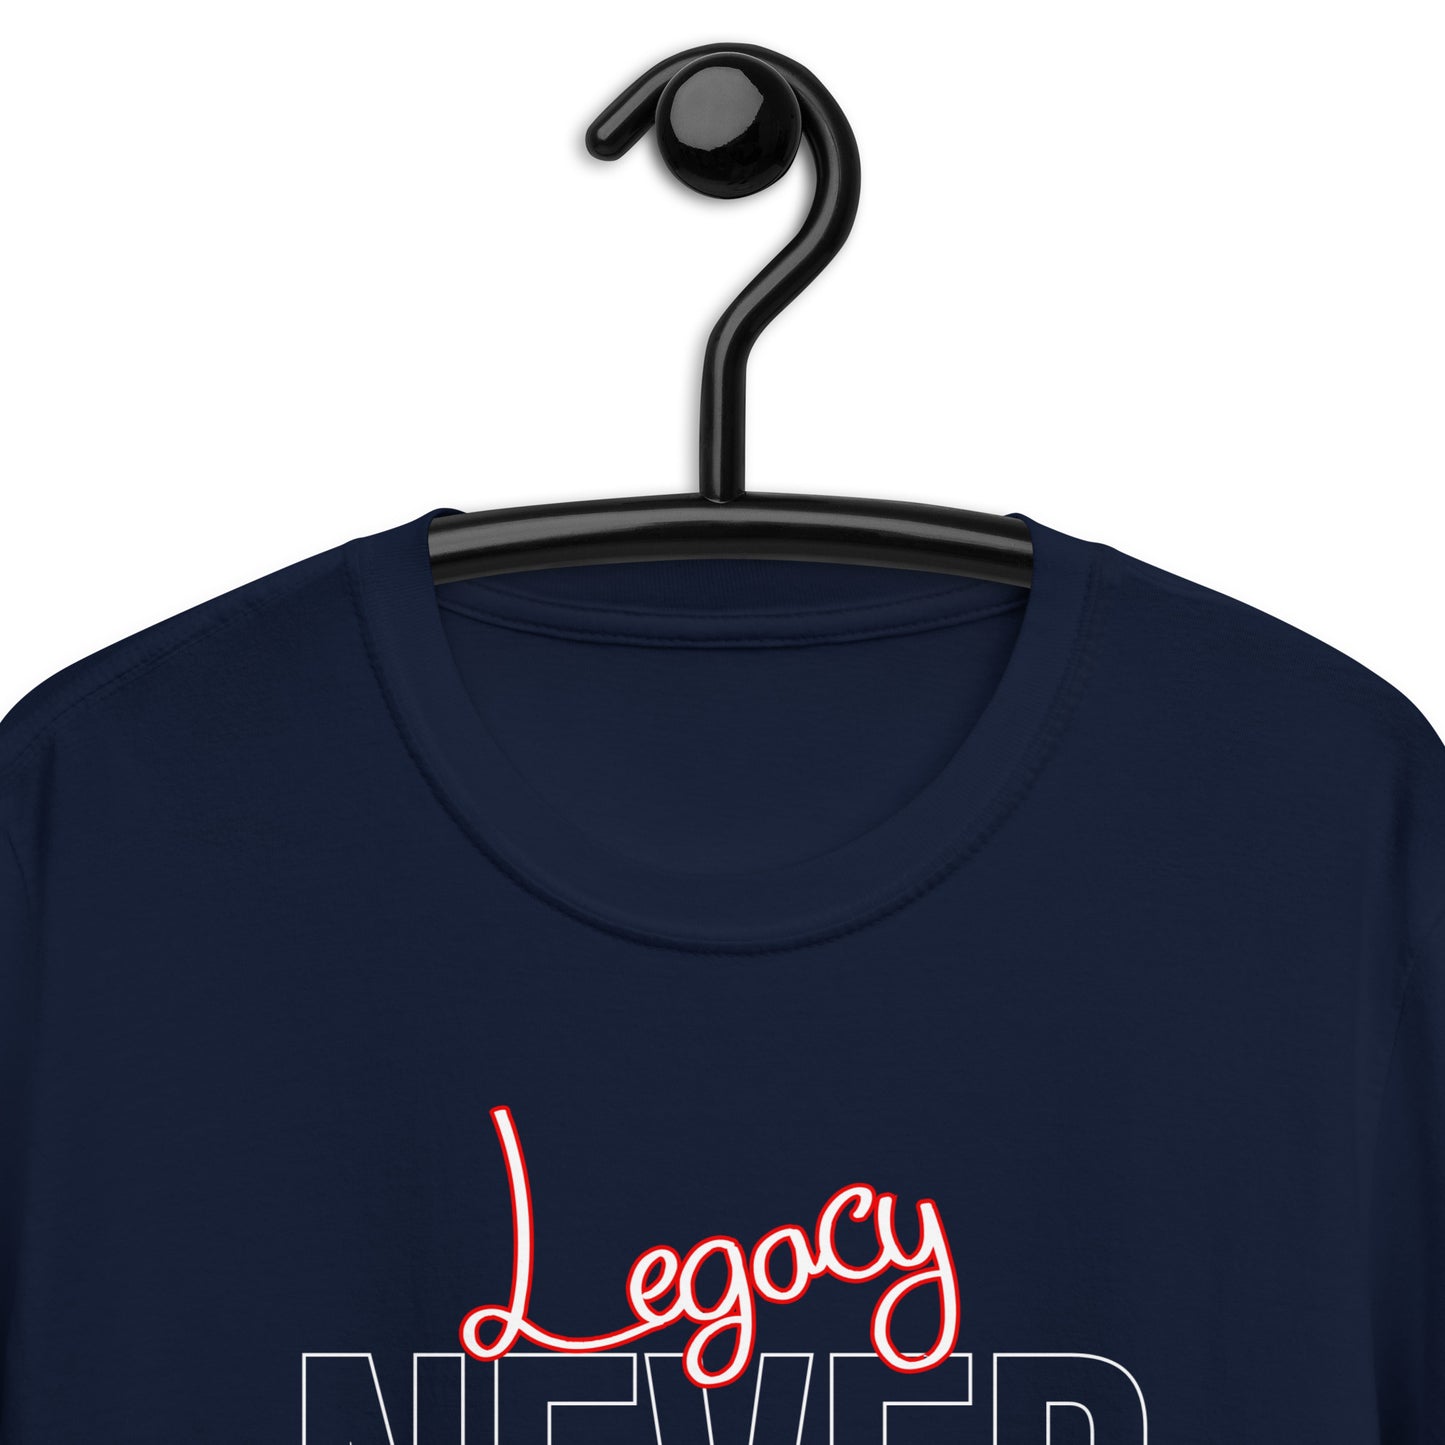 Legacy Never Fades V1.0 - Short-Sleeve Unisex T-Shirt